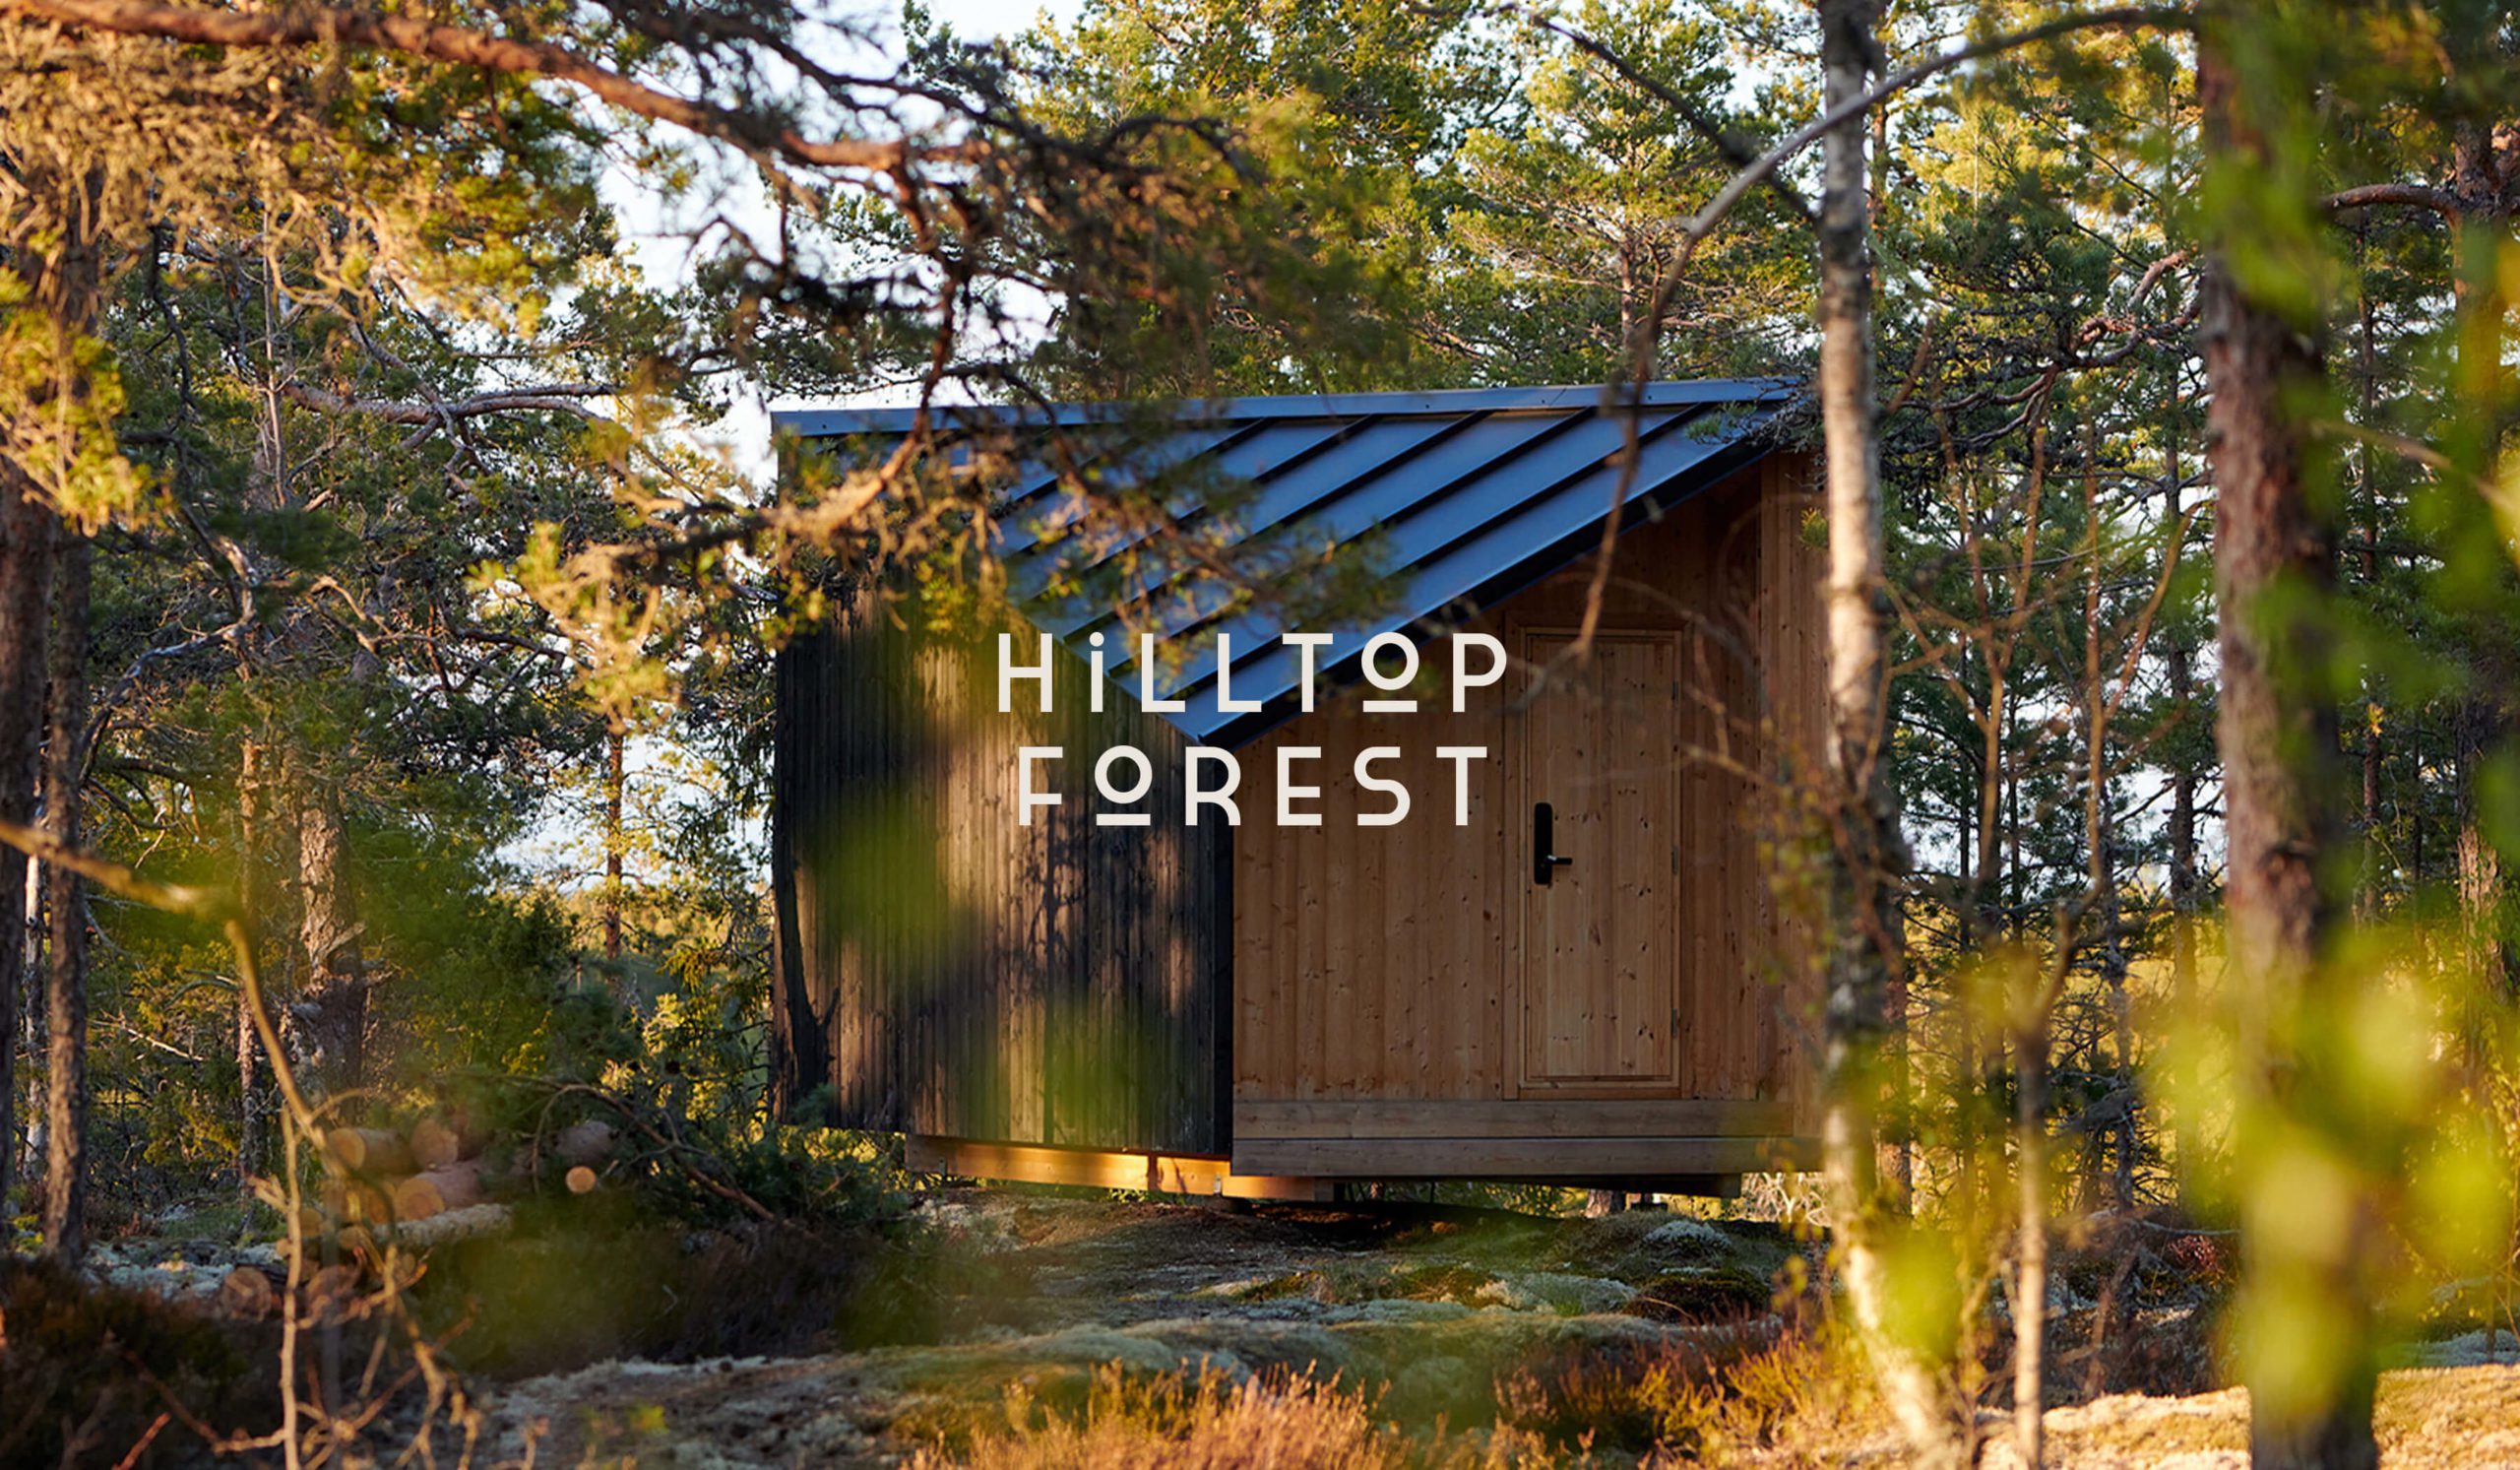 Hilltop Forest retreat logo overlaid cabin image